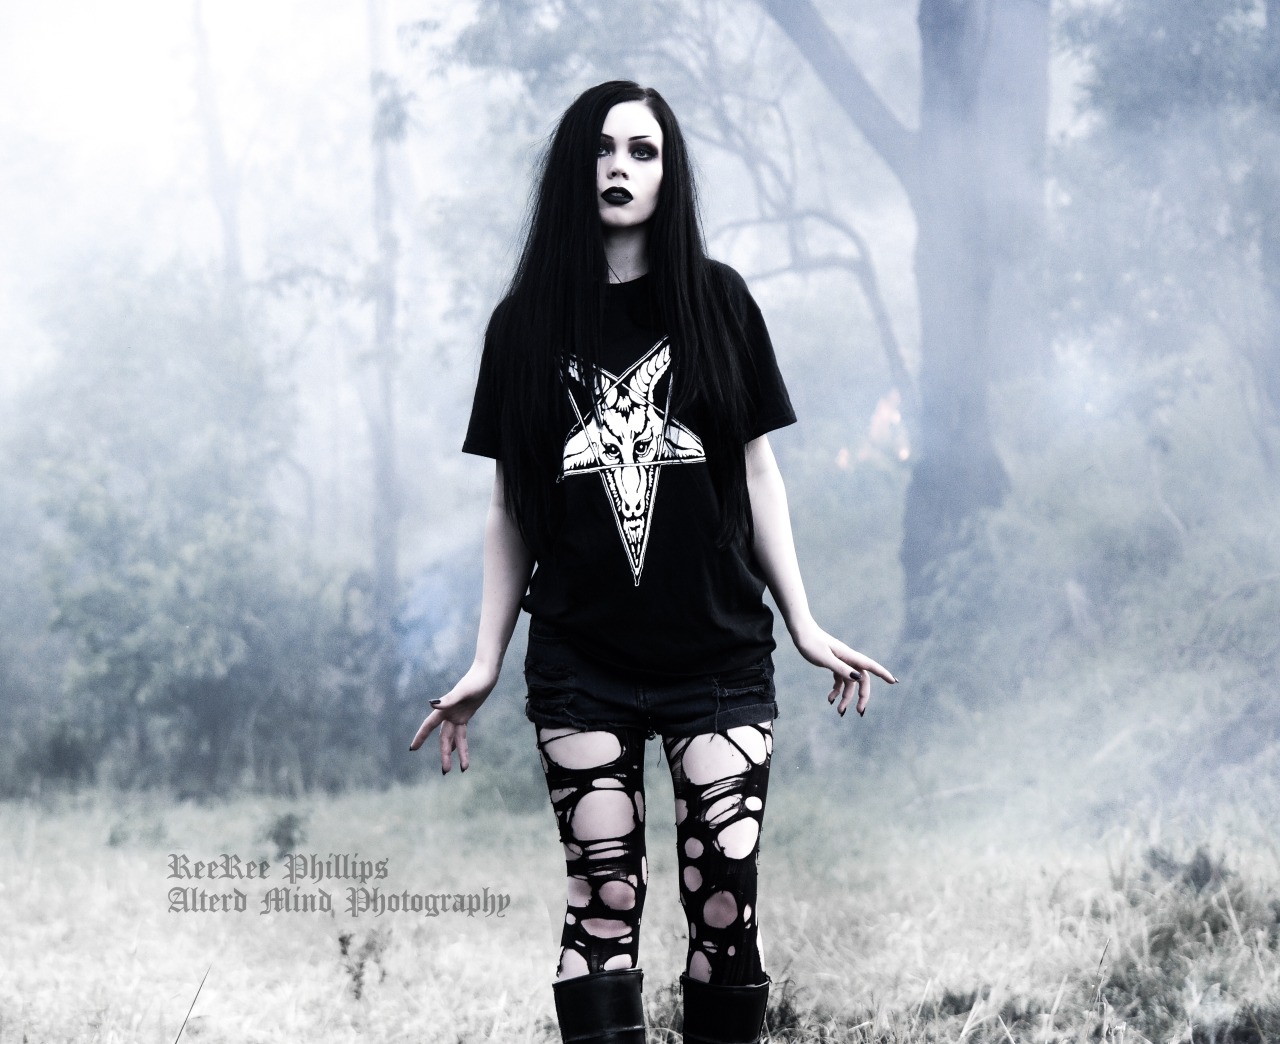 Women Gothic Ripped Clothes Black Clothing Pentagram Satanism Long Hair Dark Hair Black Lipstick Bla 1280x1044